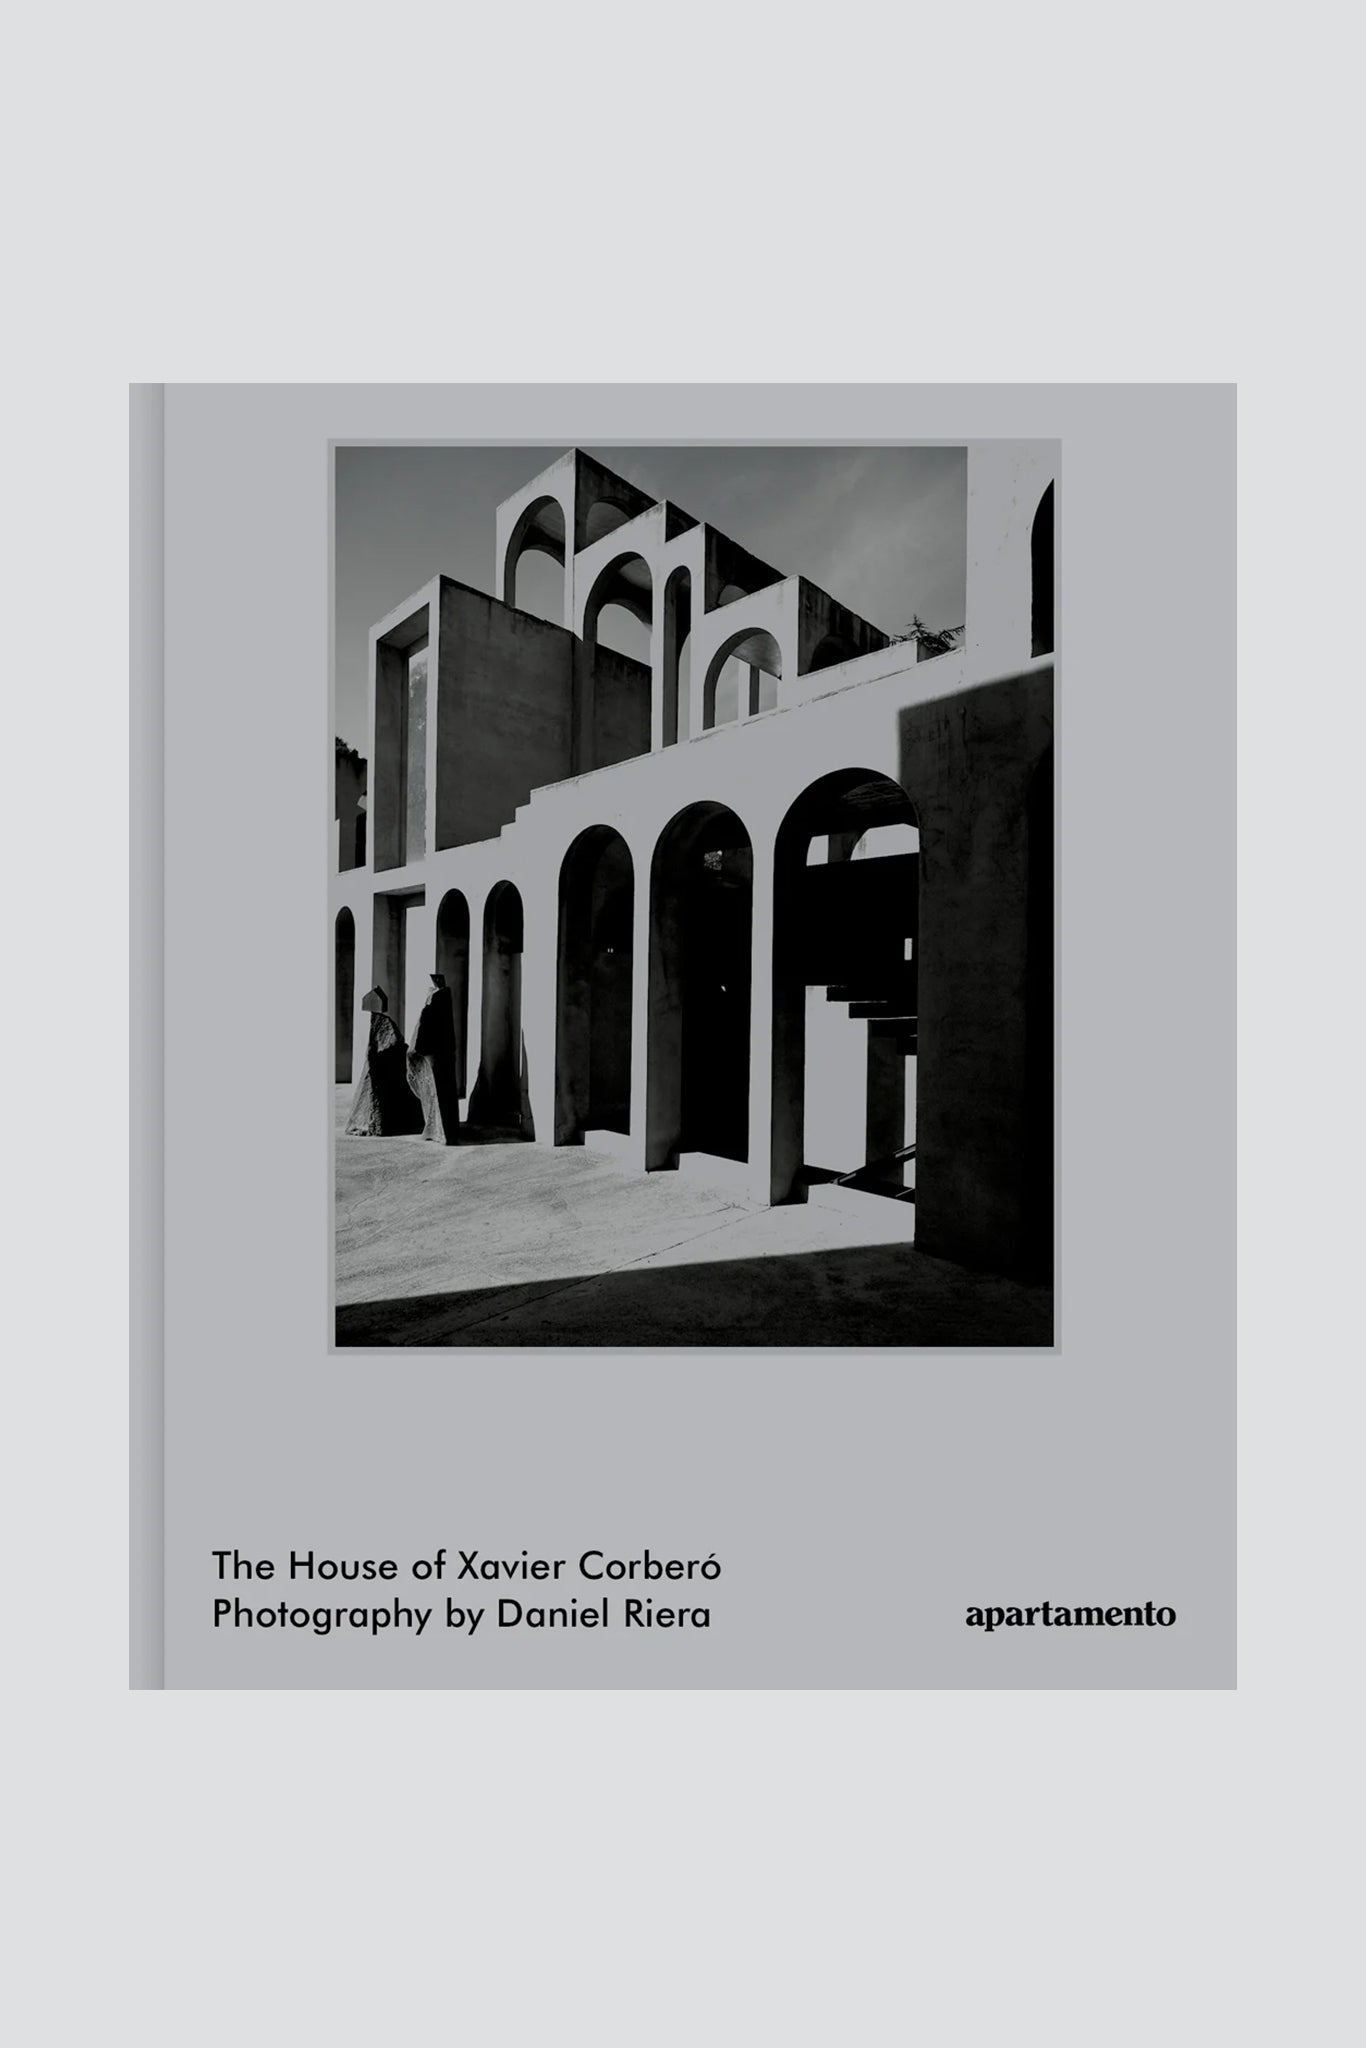 The House of Xavier Corberó